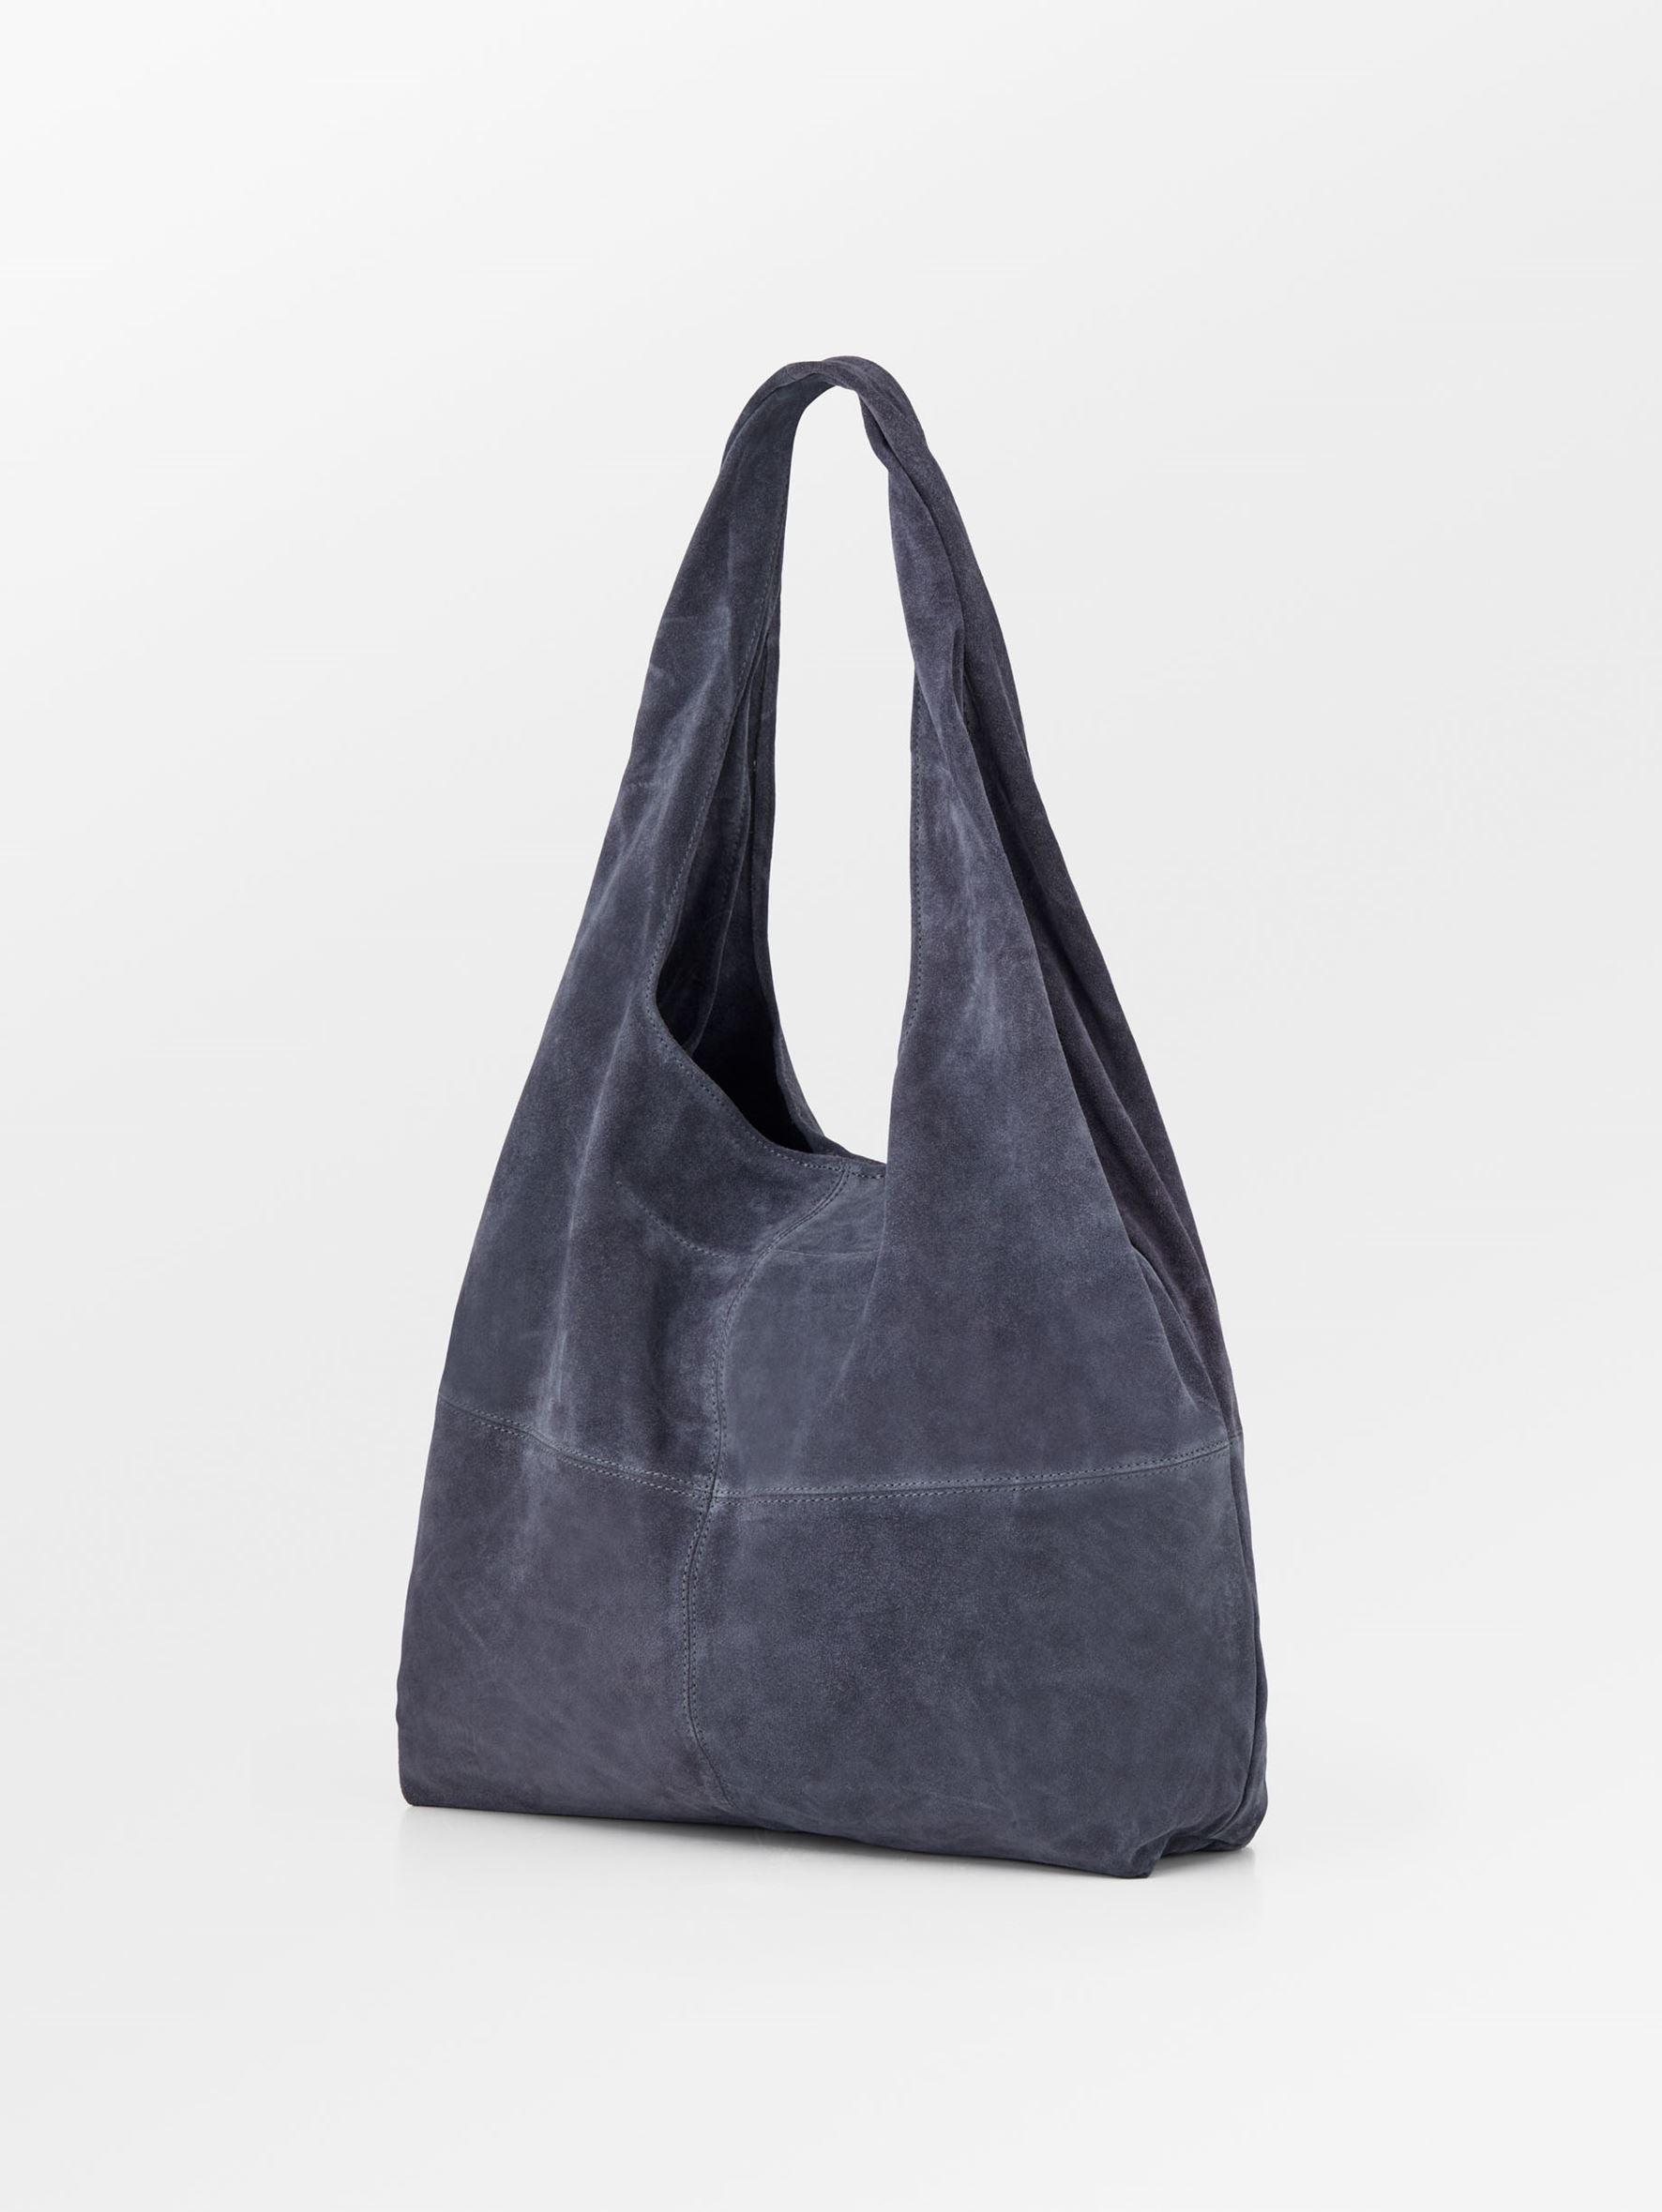 Becksöndergaard, Suede Dalliea Bag - Dark Blue, bags, bags, gifts, bags